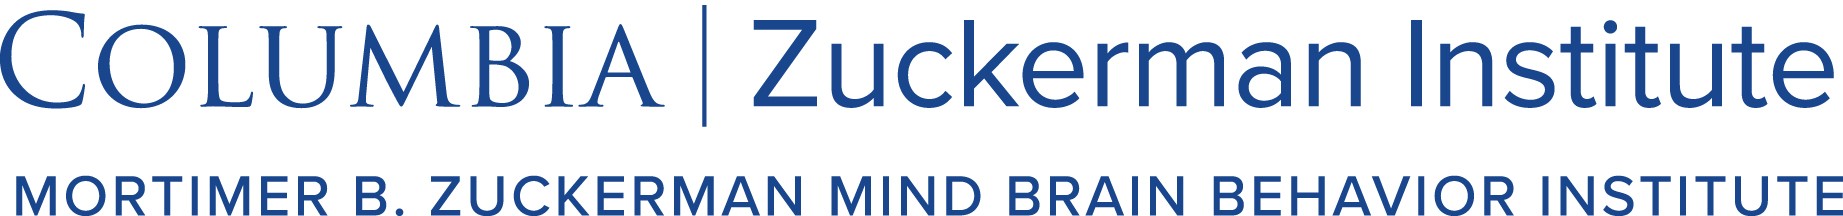 Columbia | Zuckerman Institute. Morimer B. Zuckerman Mind Brain Behavior Institute